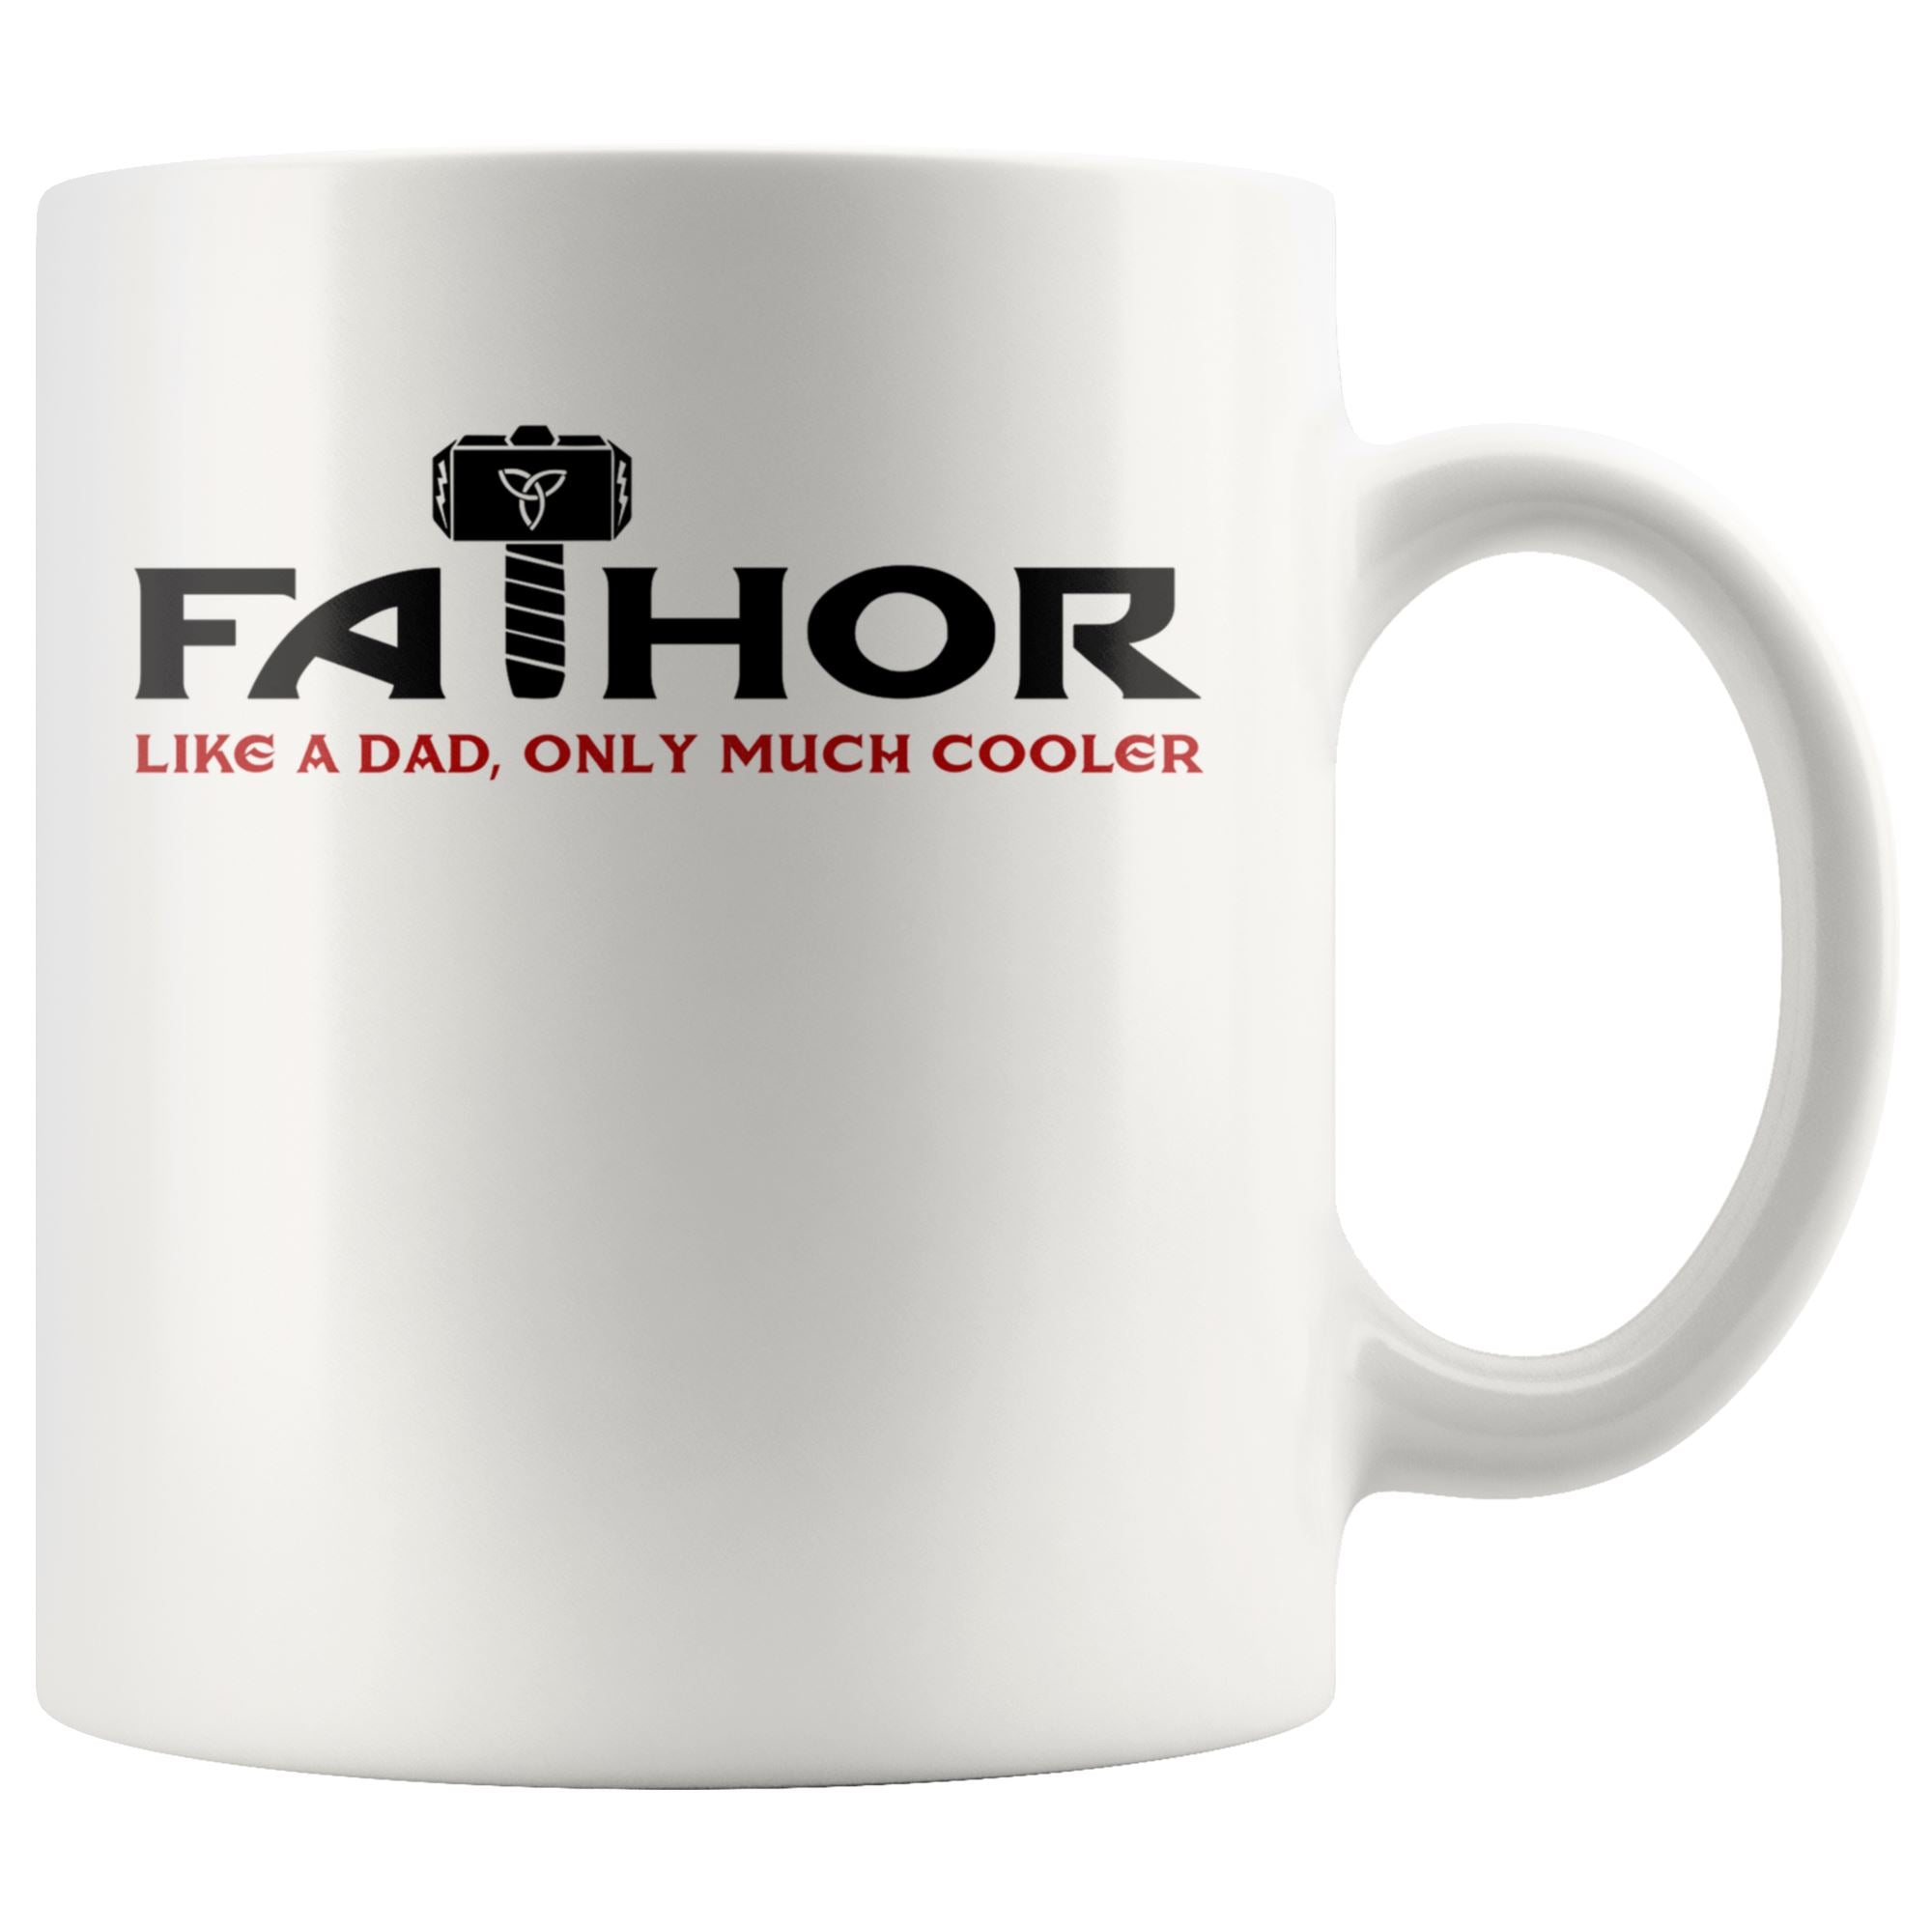 Fathor Mug Drinkware teelaunch 11oz Mug 